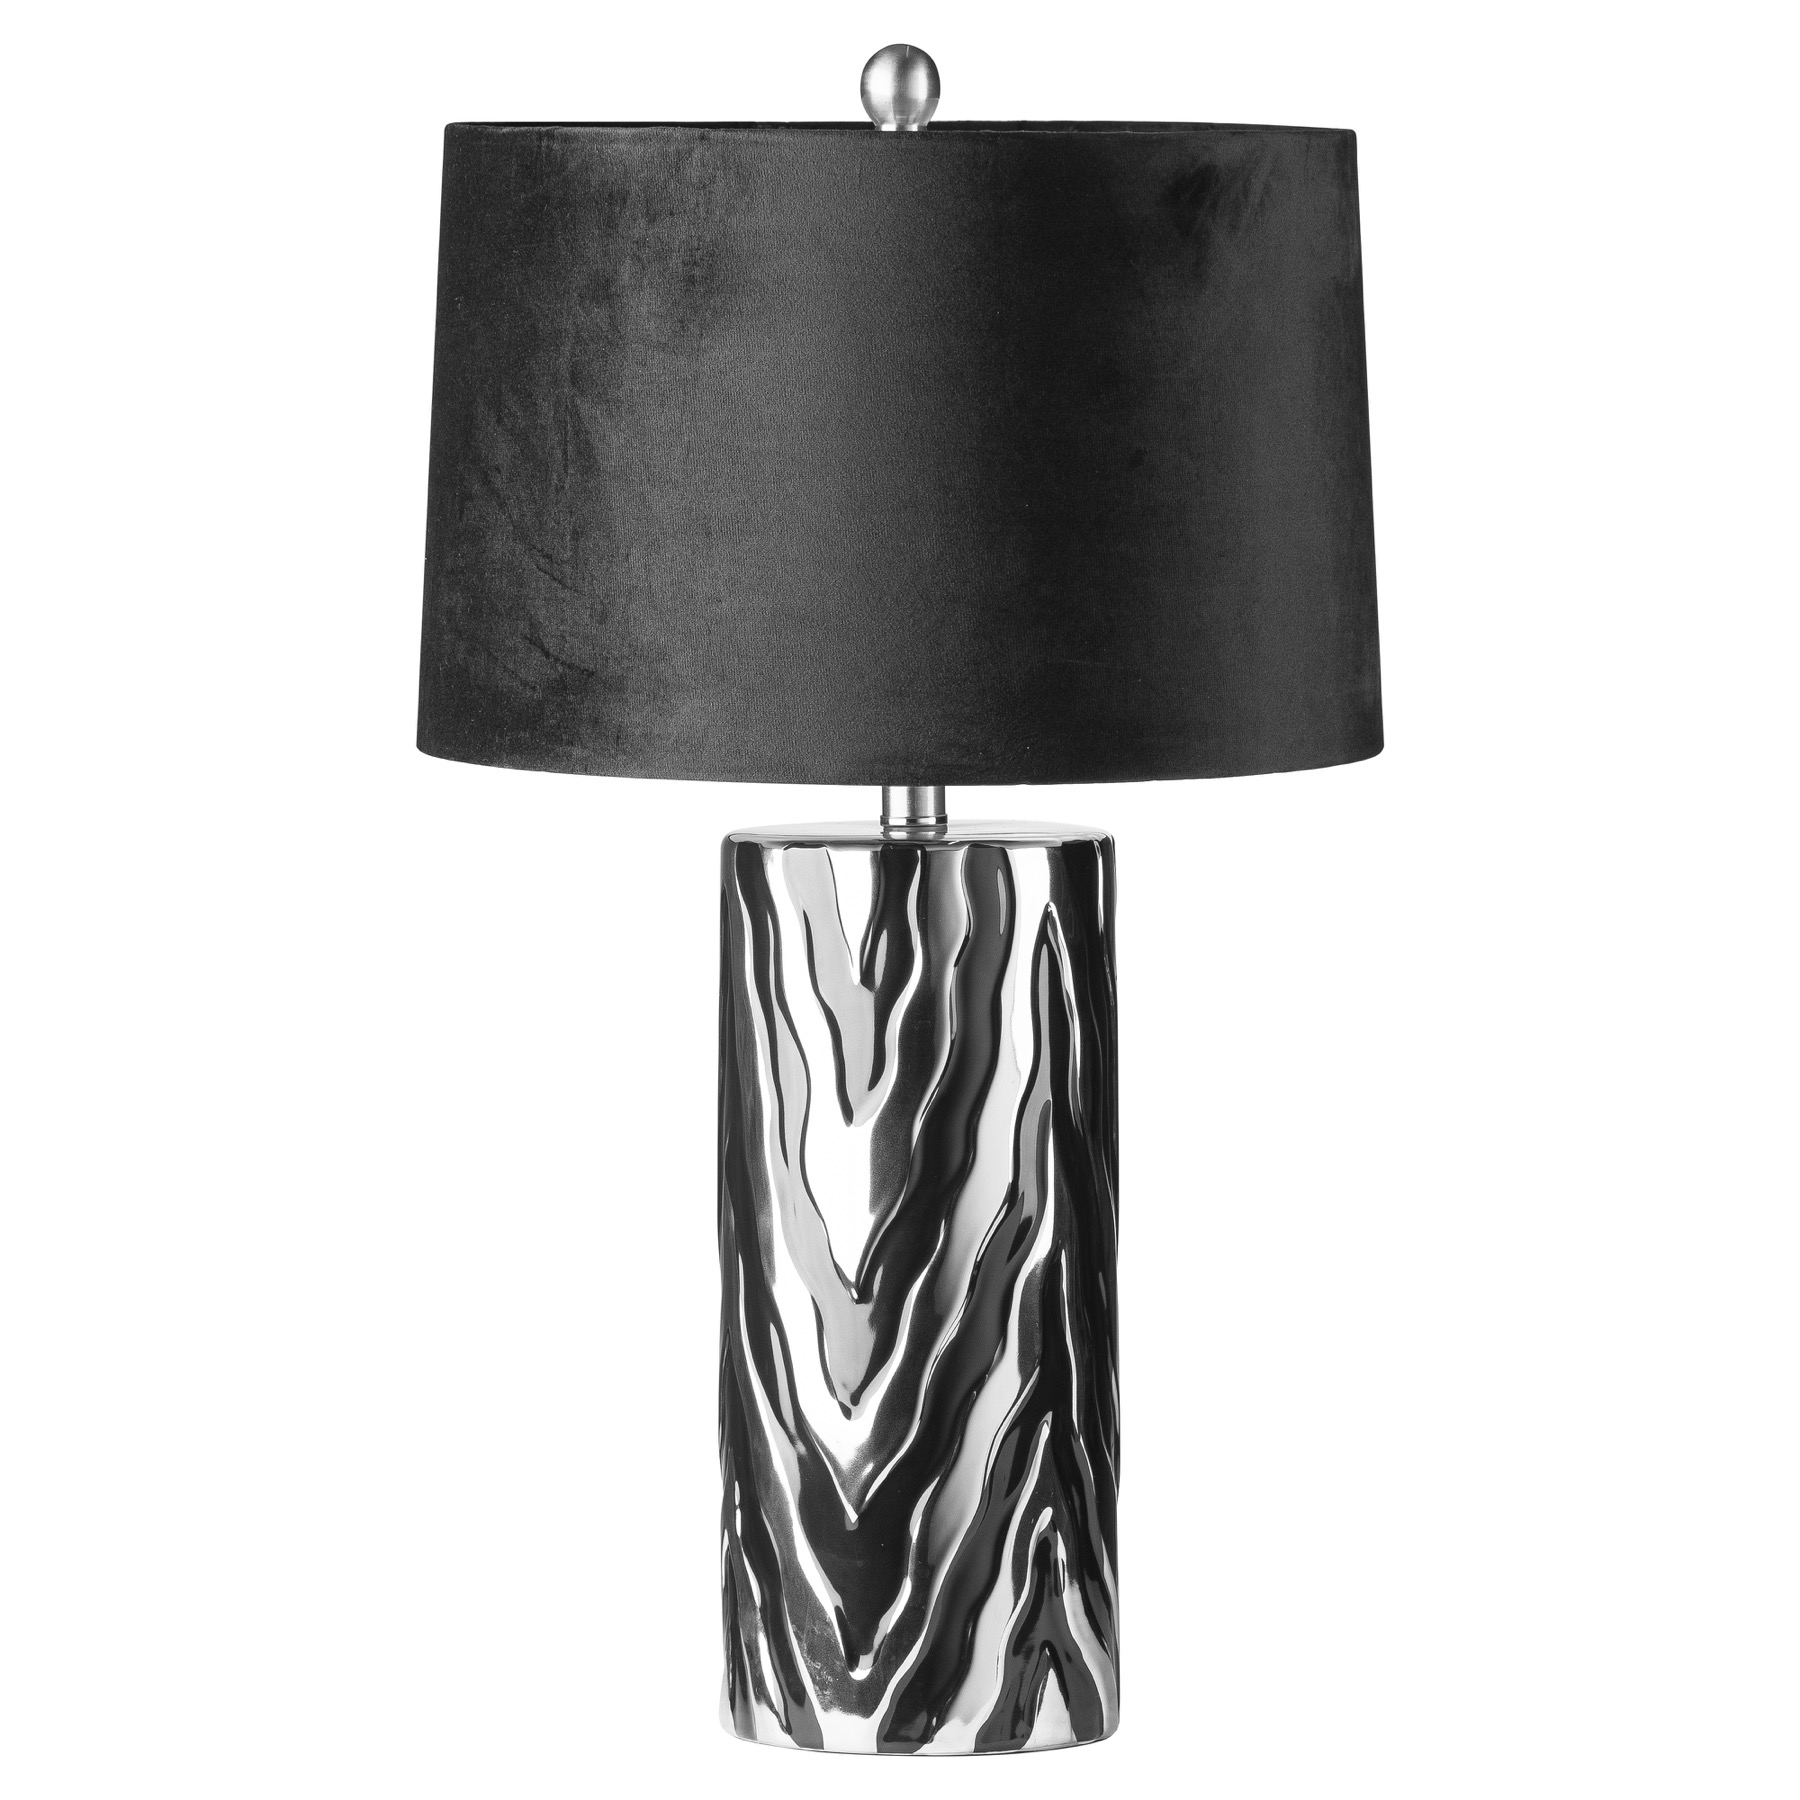 Jaspa Table Lamp With Black Velvet Shade - Image 1